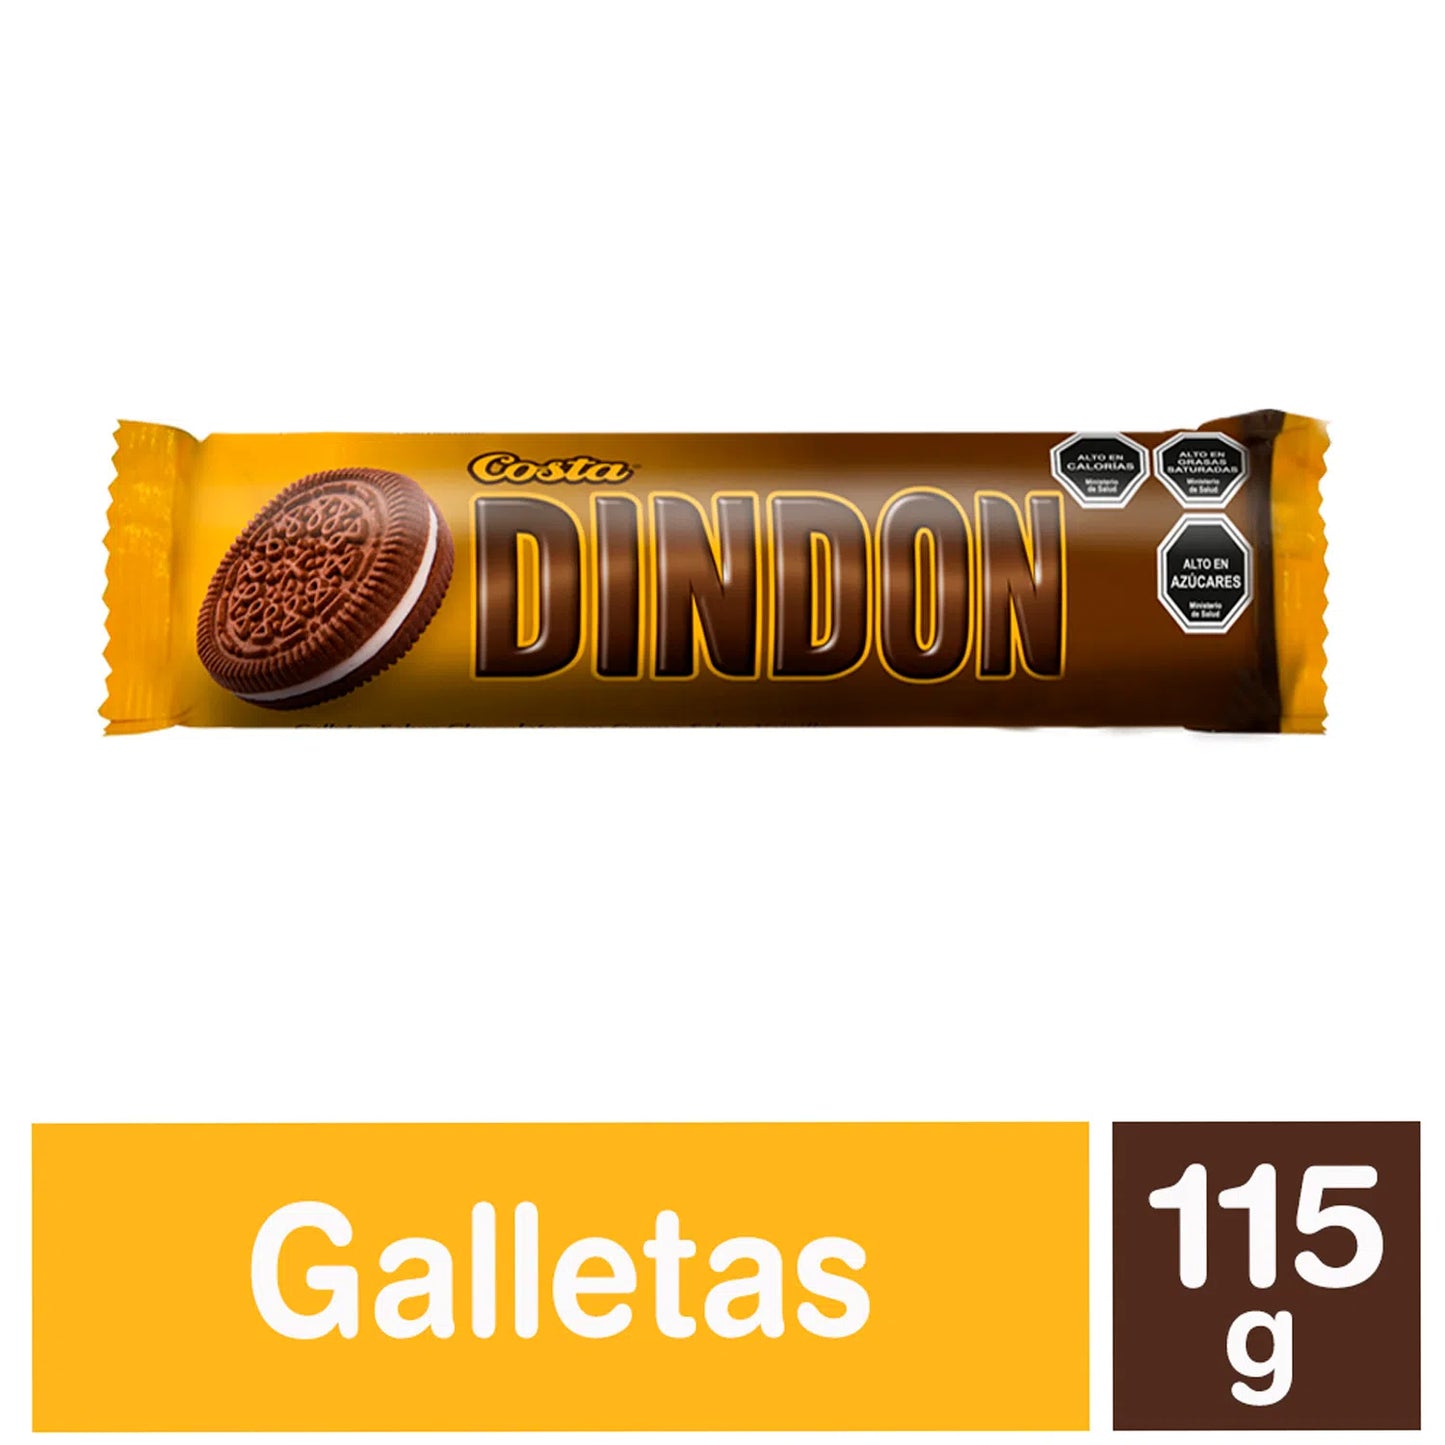 Galleta Dindon Costa